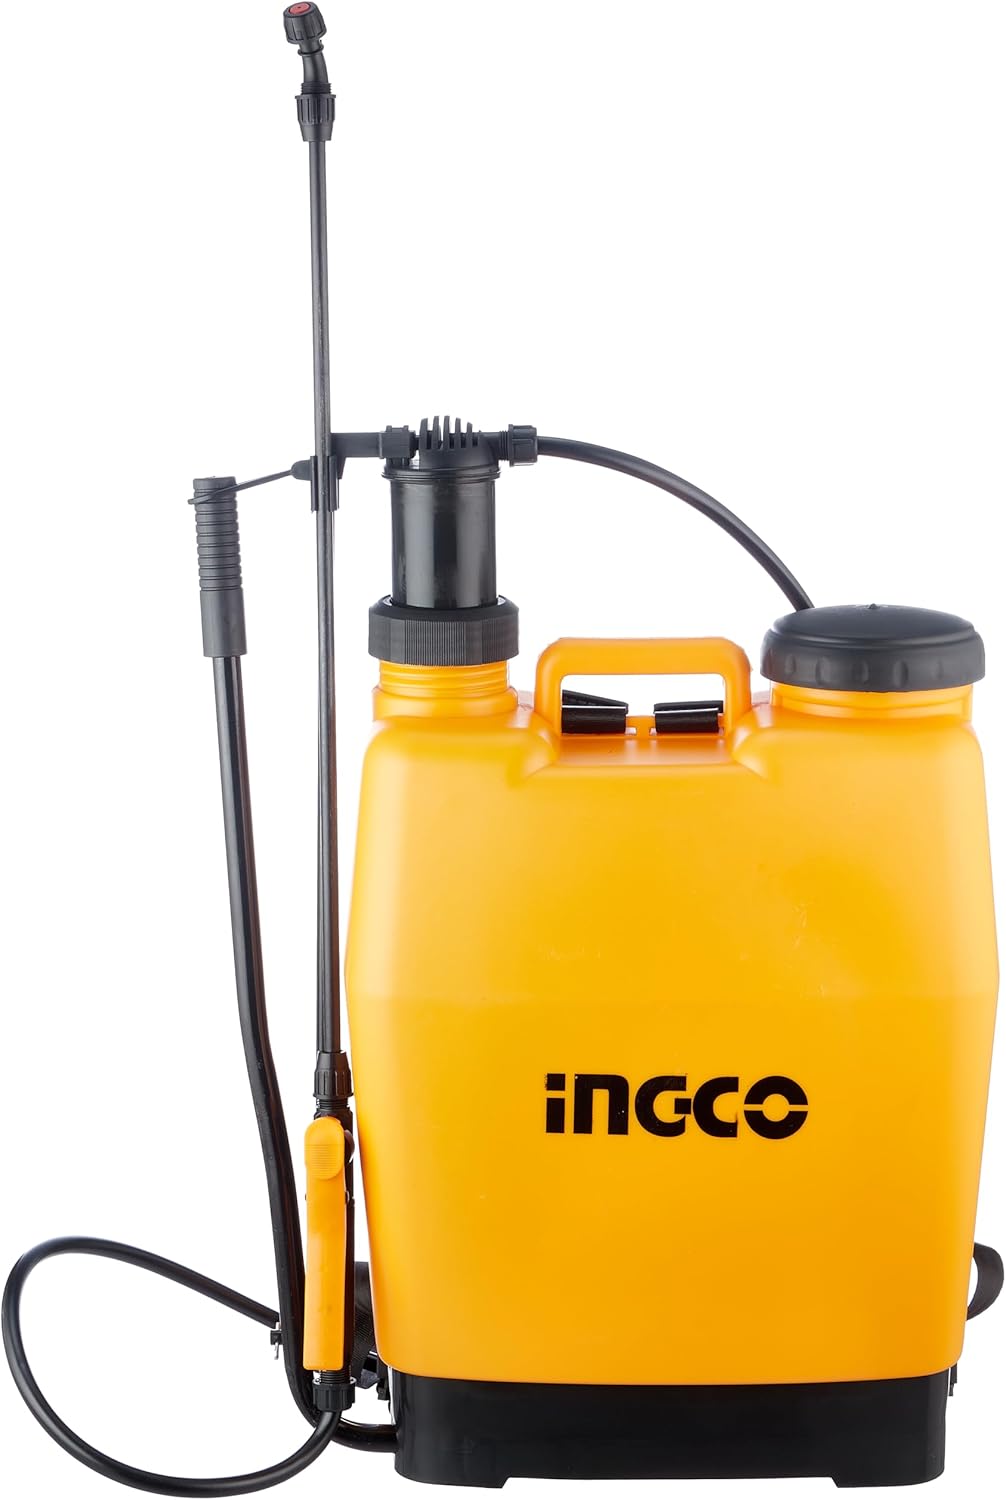 INGCO Knapsack Sprayer Price in Pakistan